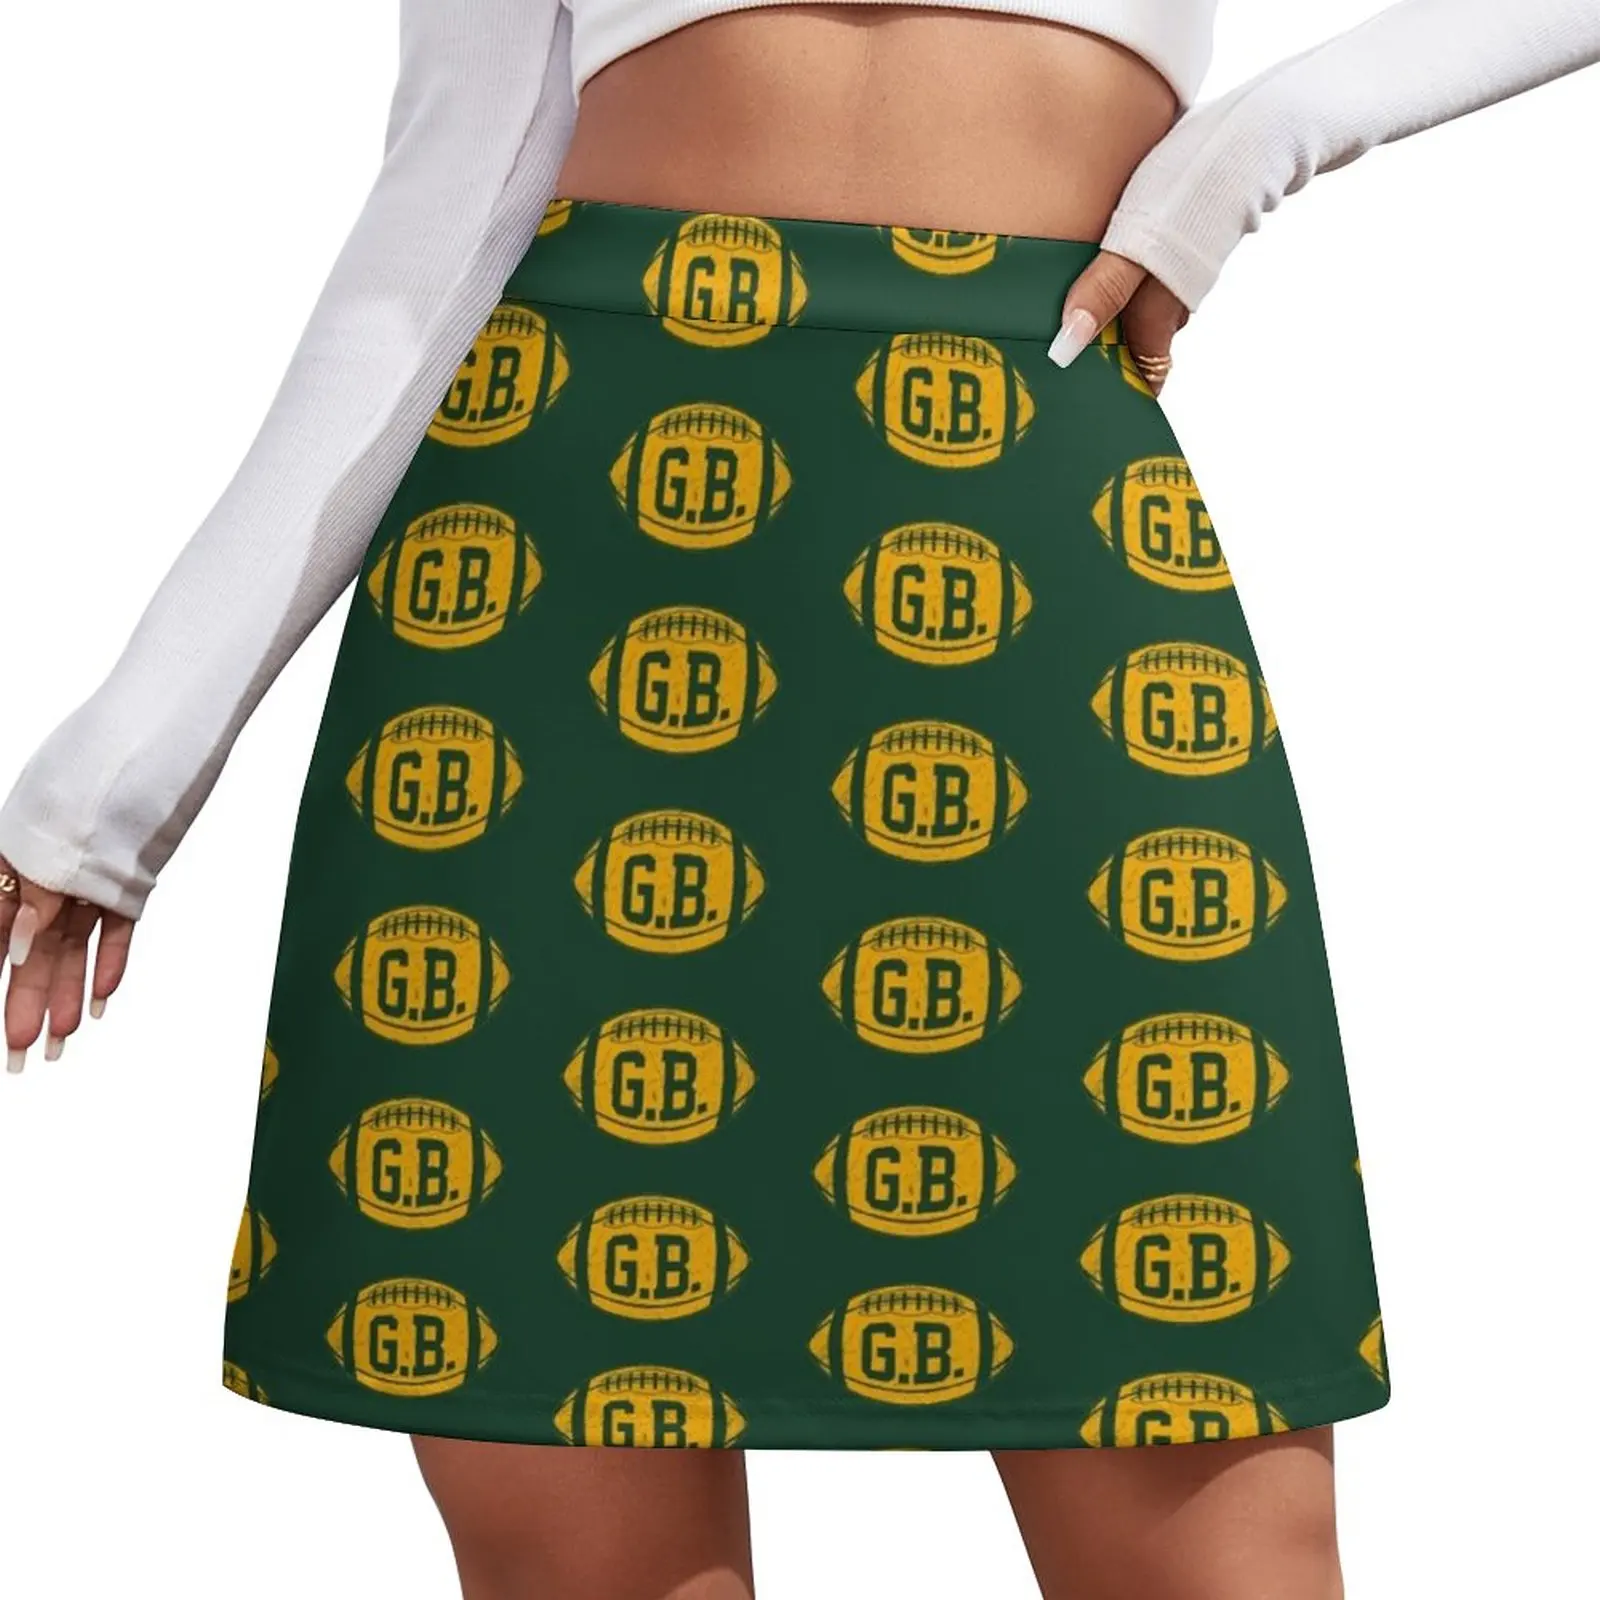 GB Retro Football - Green Mini Skirt elegant social women's skirts korean summer clothes summer skirts skirt sets 2 sets of football decals sticky number sticker decals stickers number decals